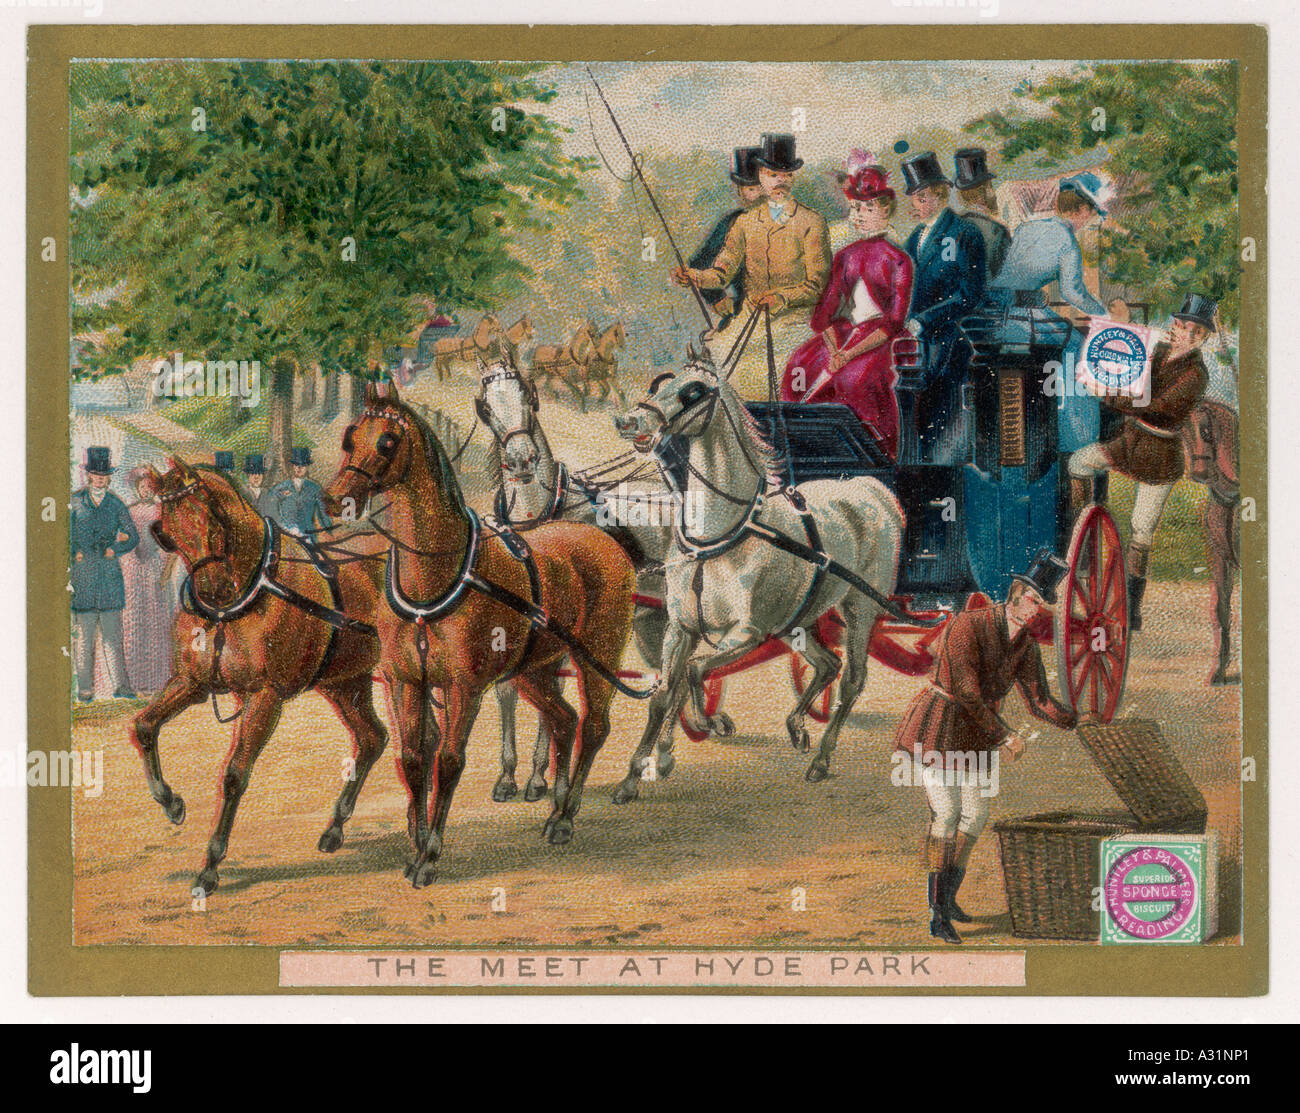 Huntley Hyde Park 1890 Stock Photo